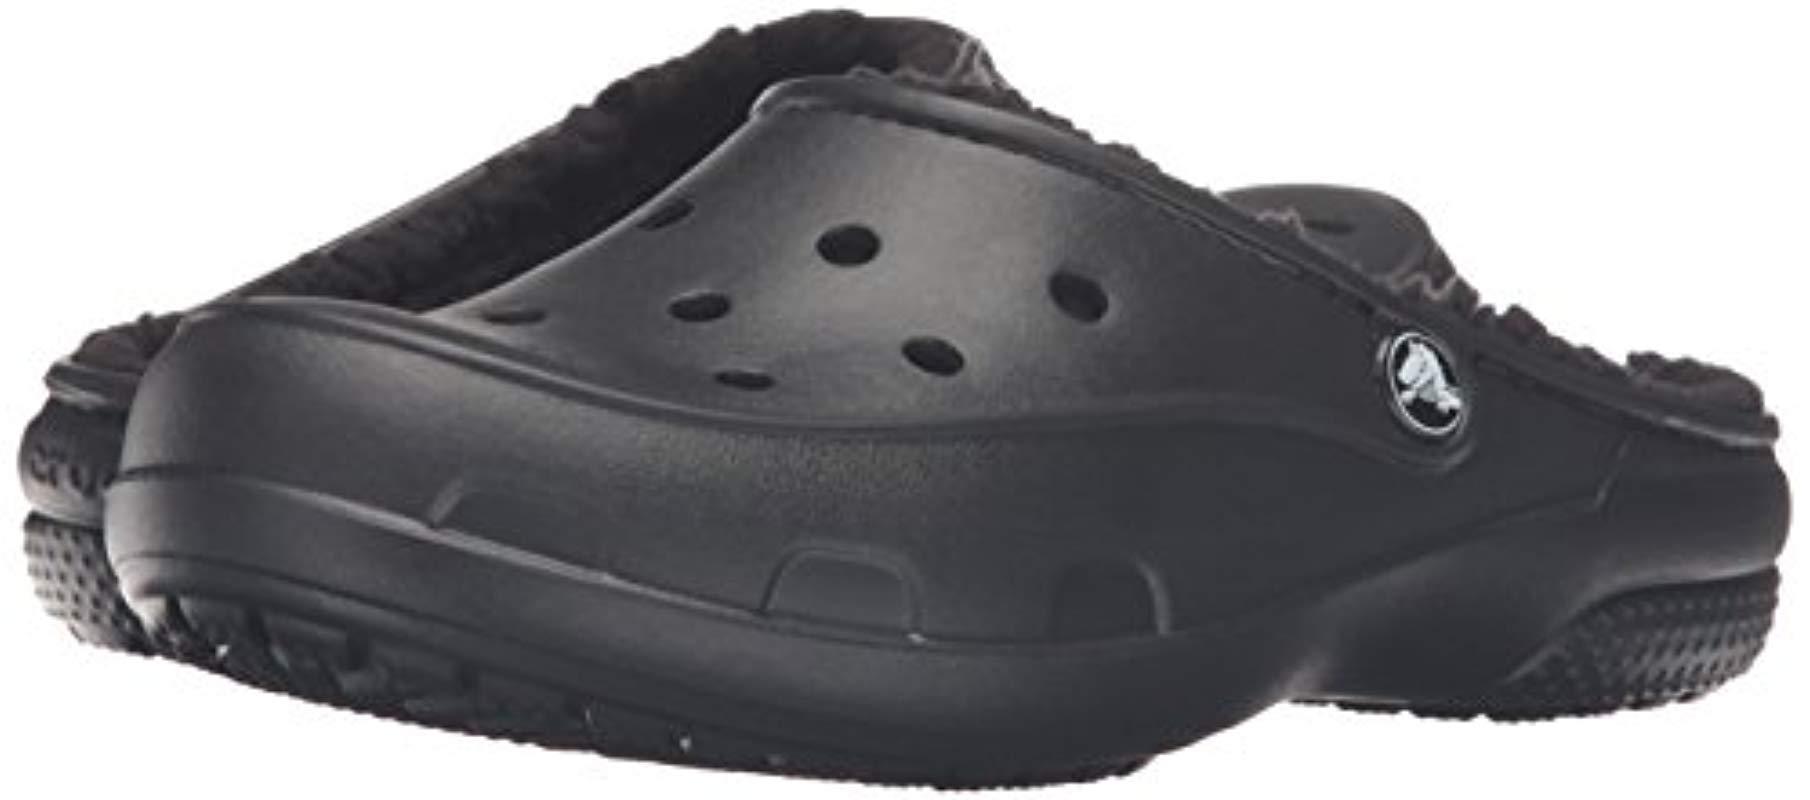 Crocs™ Freesail Plush Lined Clog in Black/Black (Black) | Lyst